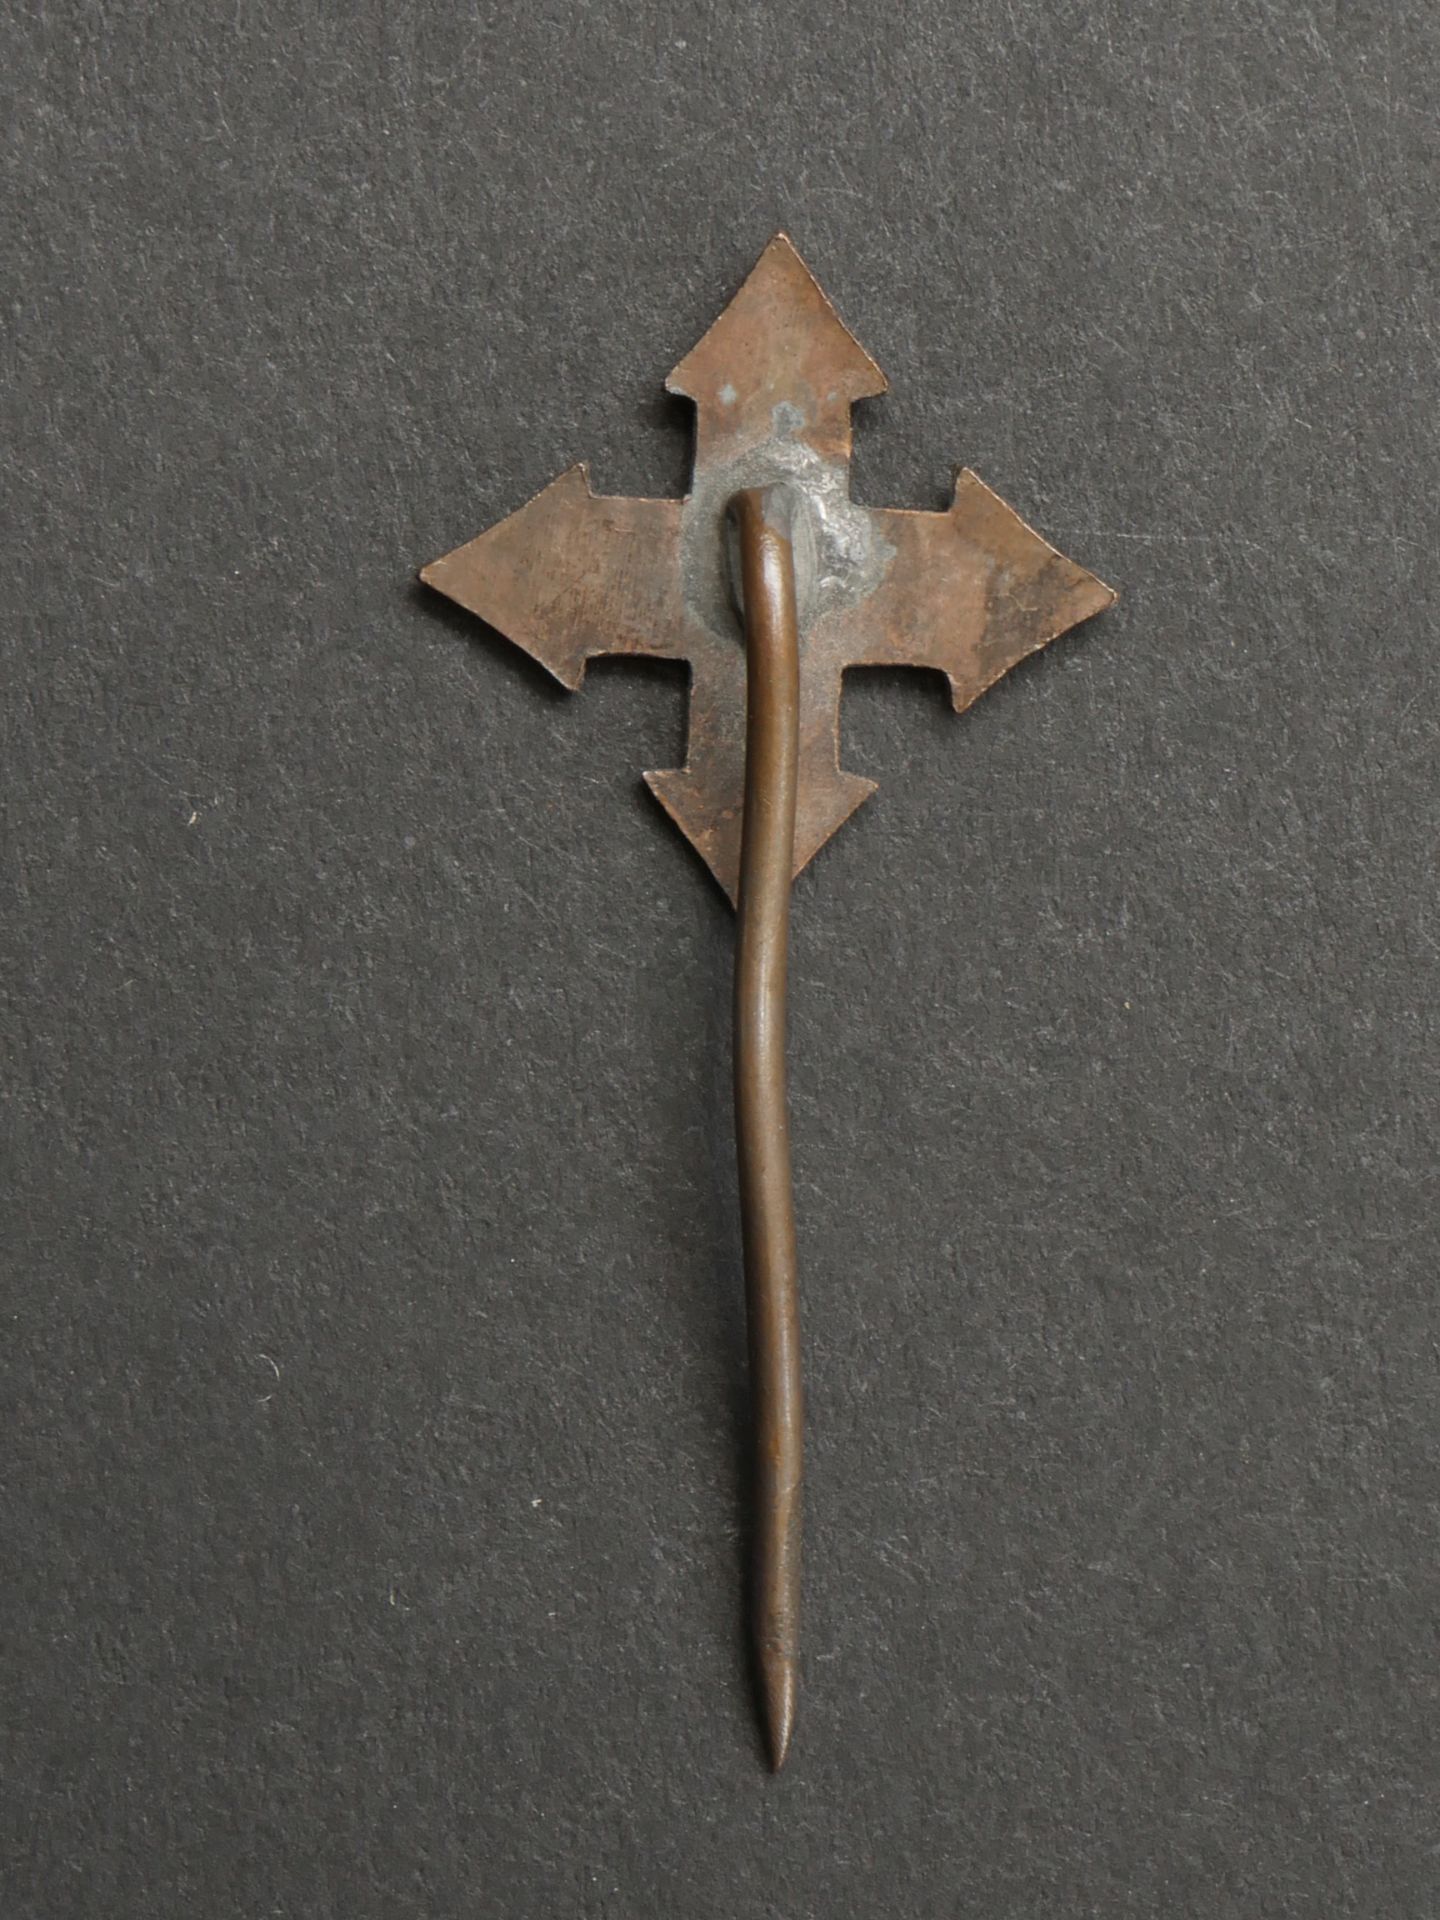 Insigne des croix flechees hongrois. Hungarian Arrow Cross badge. - Image 2 of 2